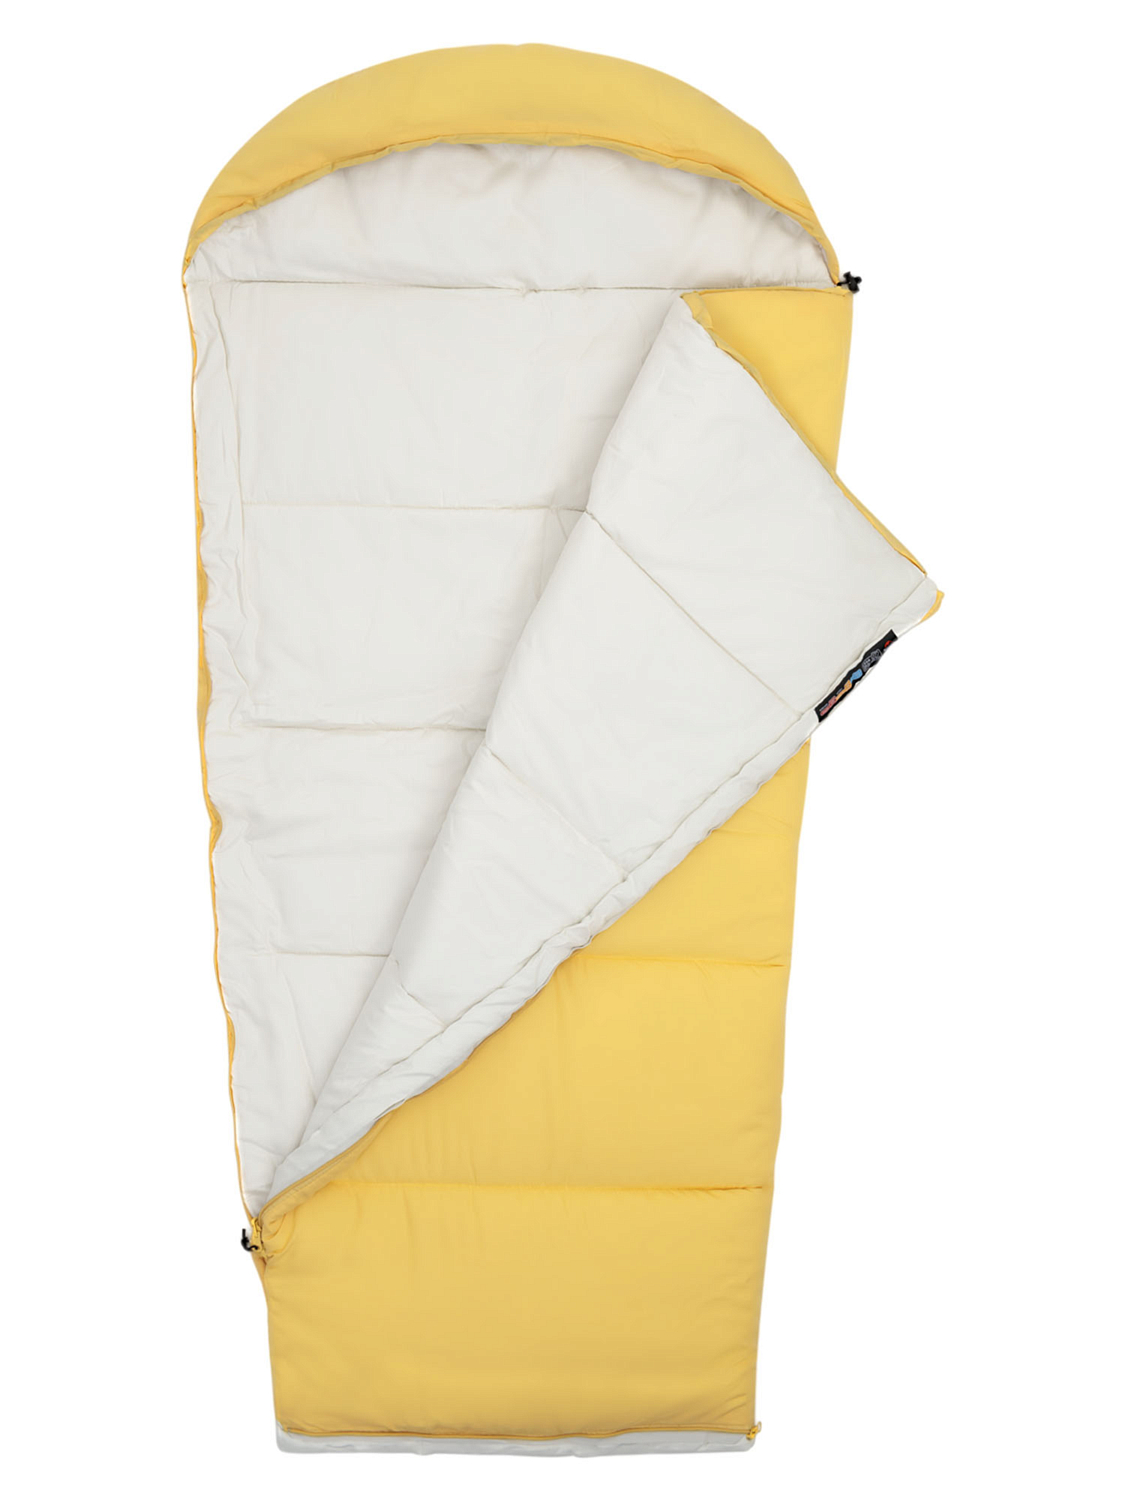 Спальник Naturehike Children'S Growing Sleeping Bag C300 Yellow